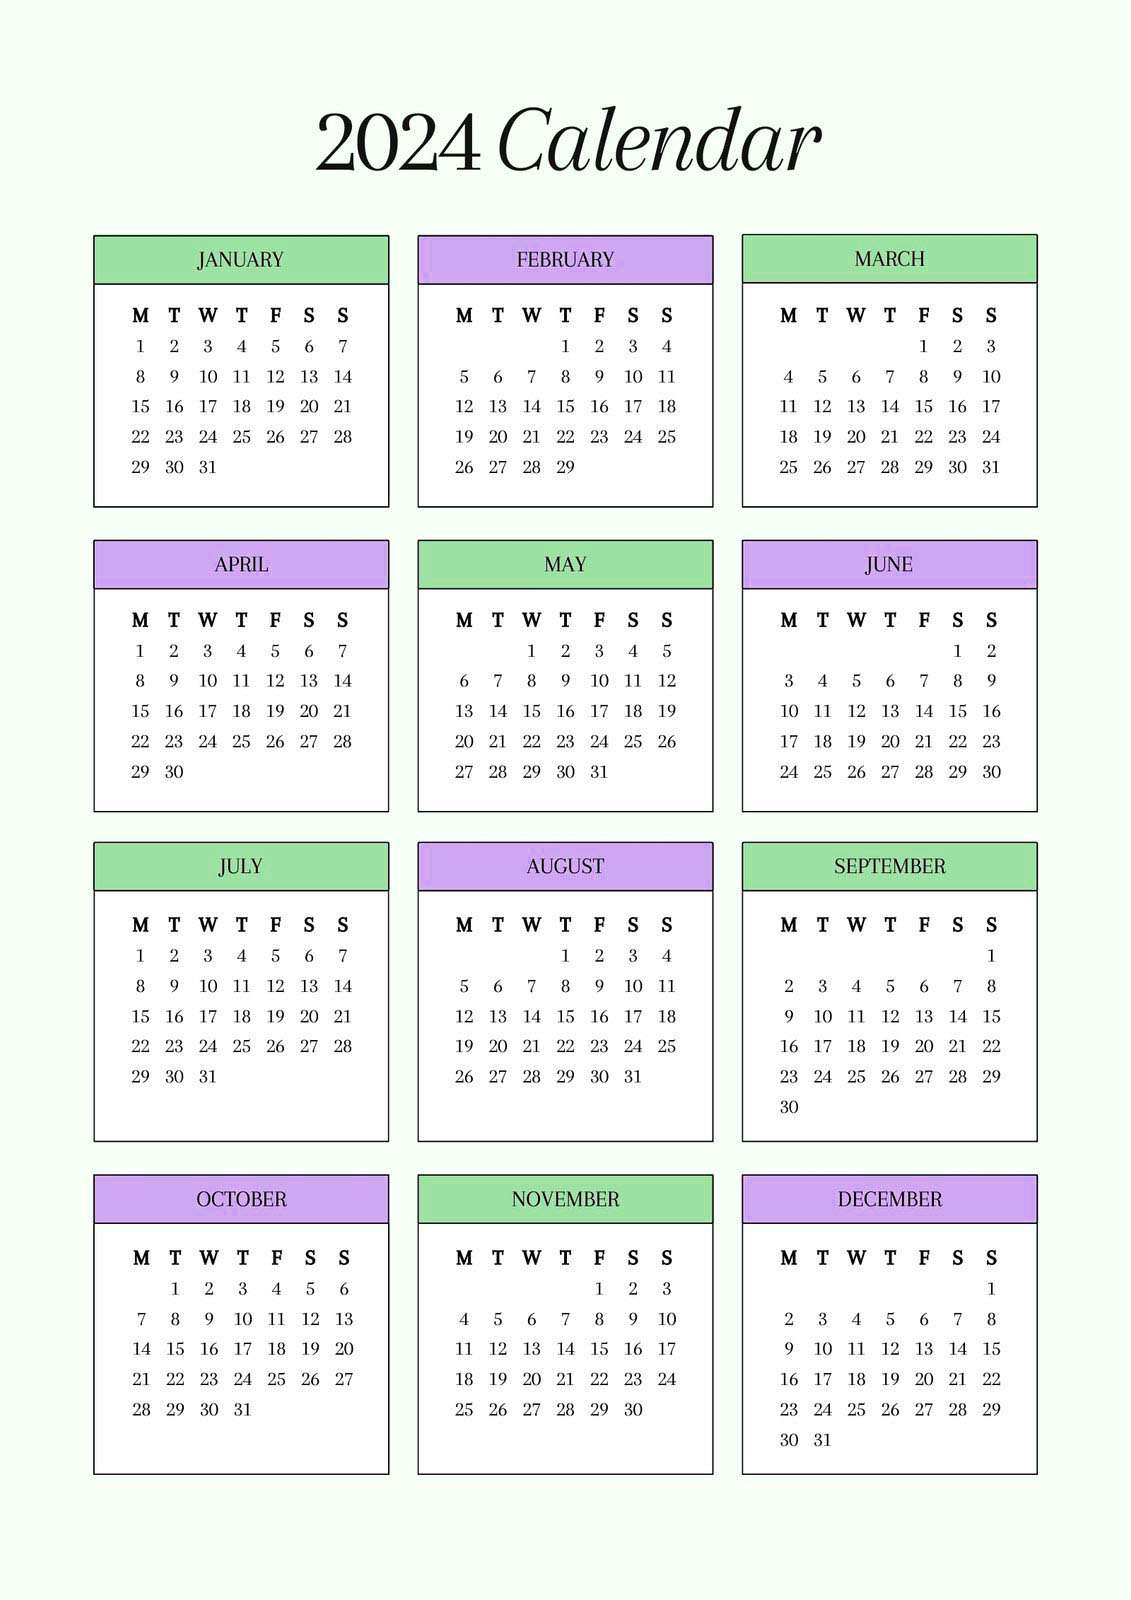 2024 Calendar Weekly Planning